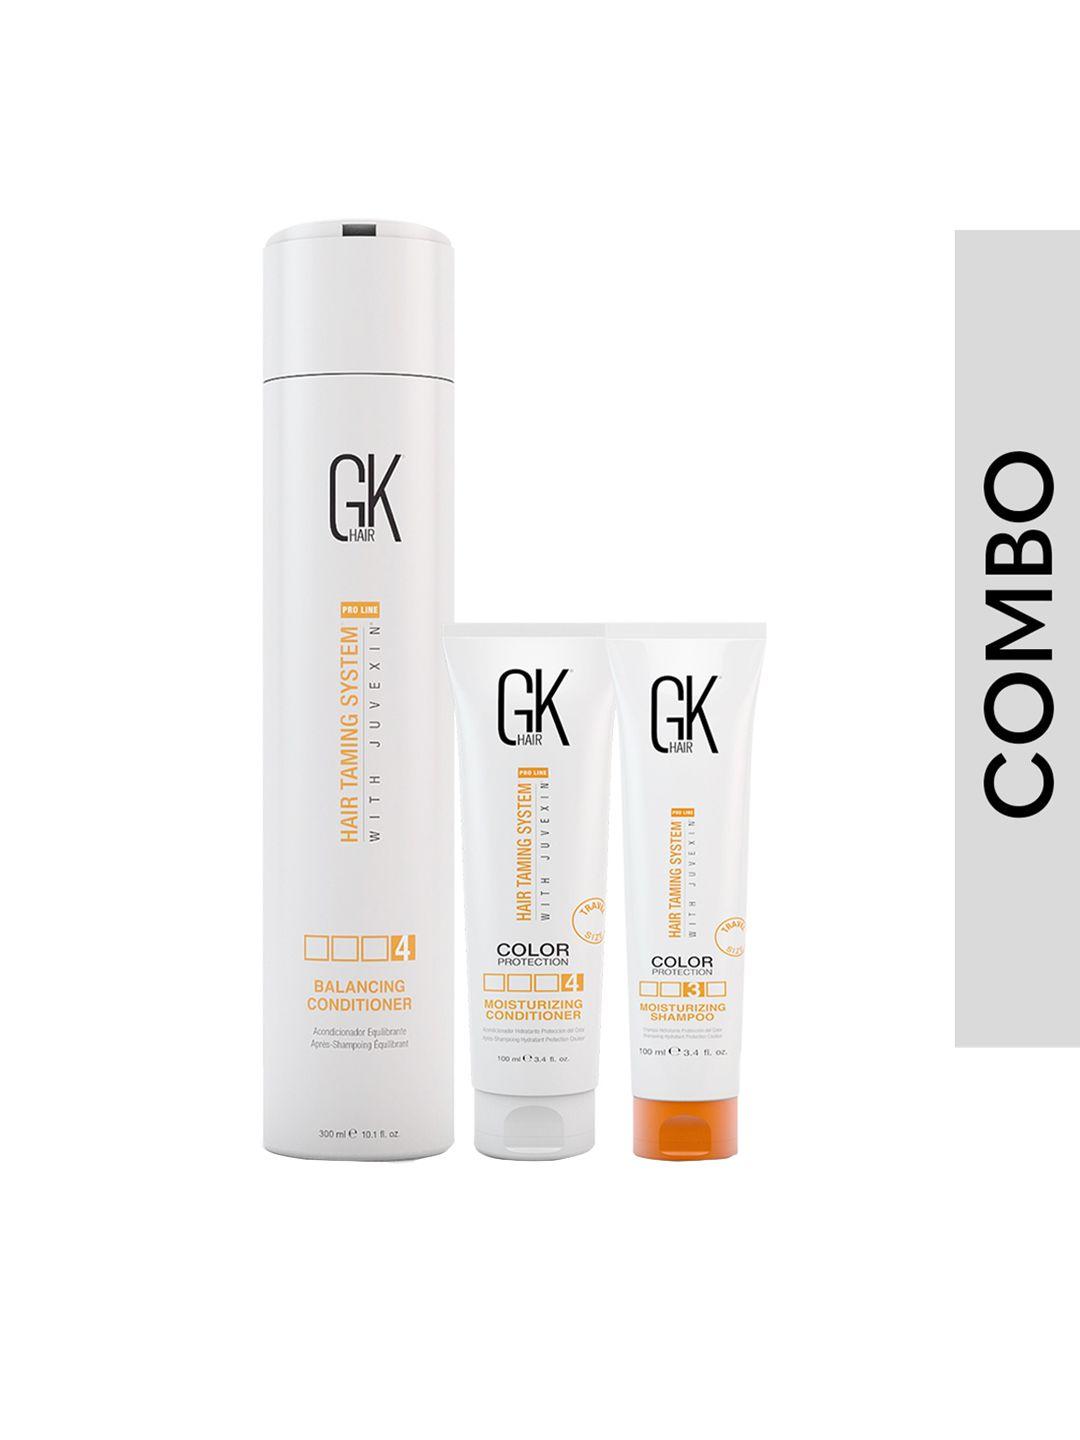 gk hair set of moisturizing shampoo & conditioner 100ml each + balancing conditioner 300ml